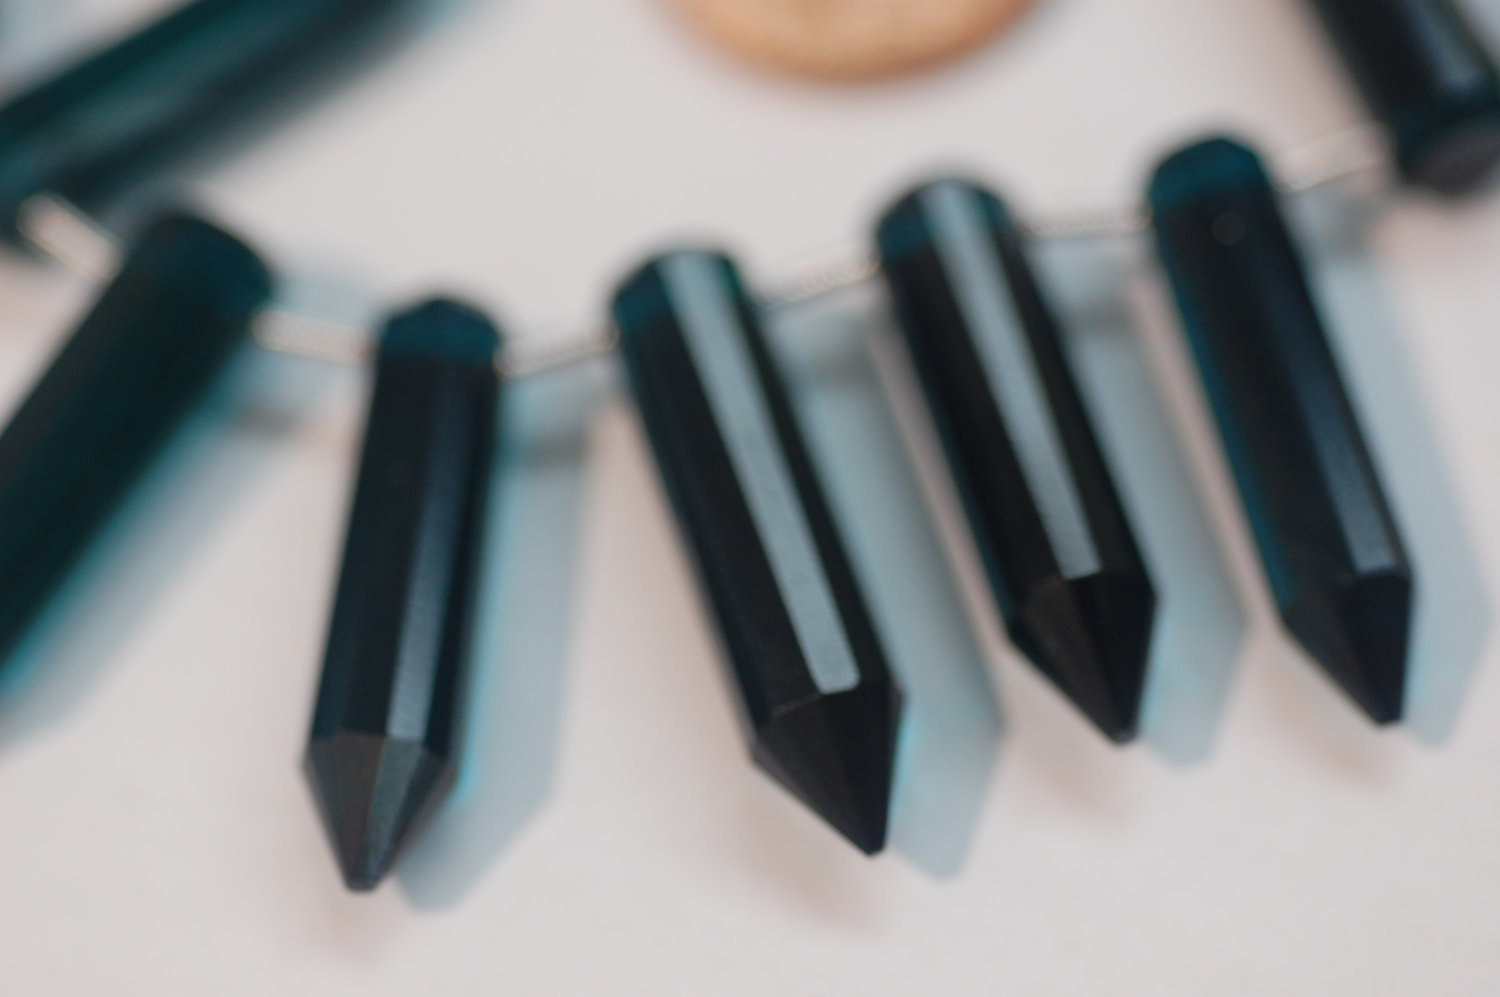 Teal Blue Hydro Quartz Pencil Cut Faceted